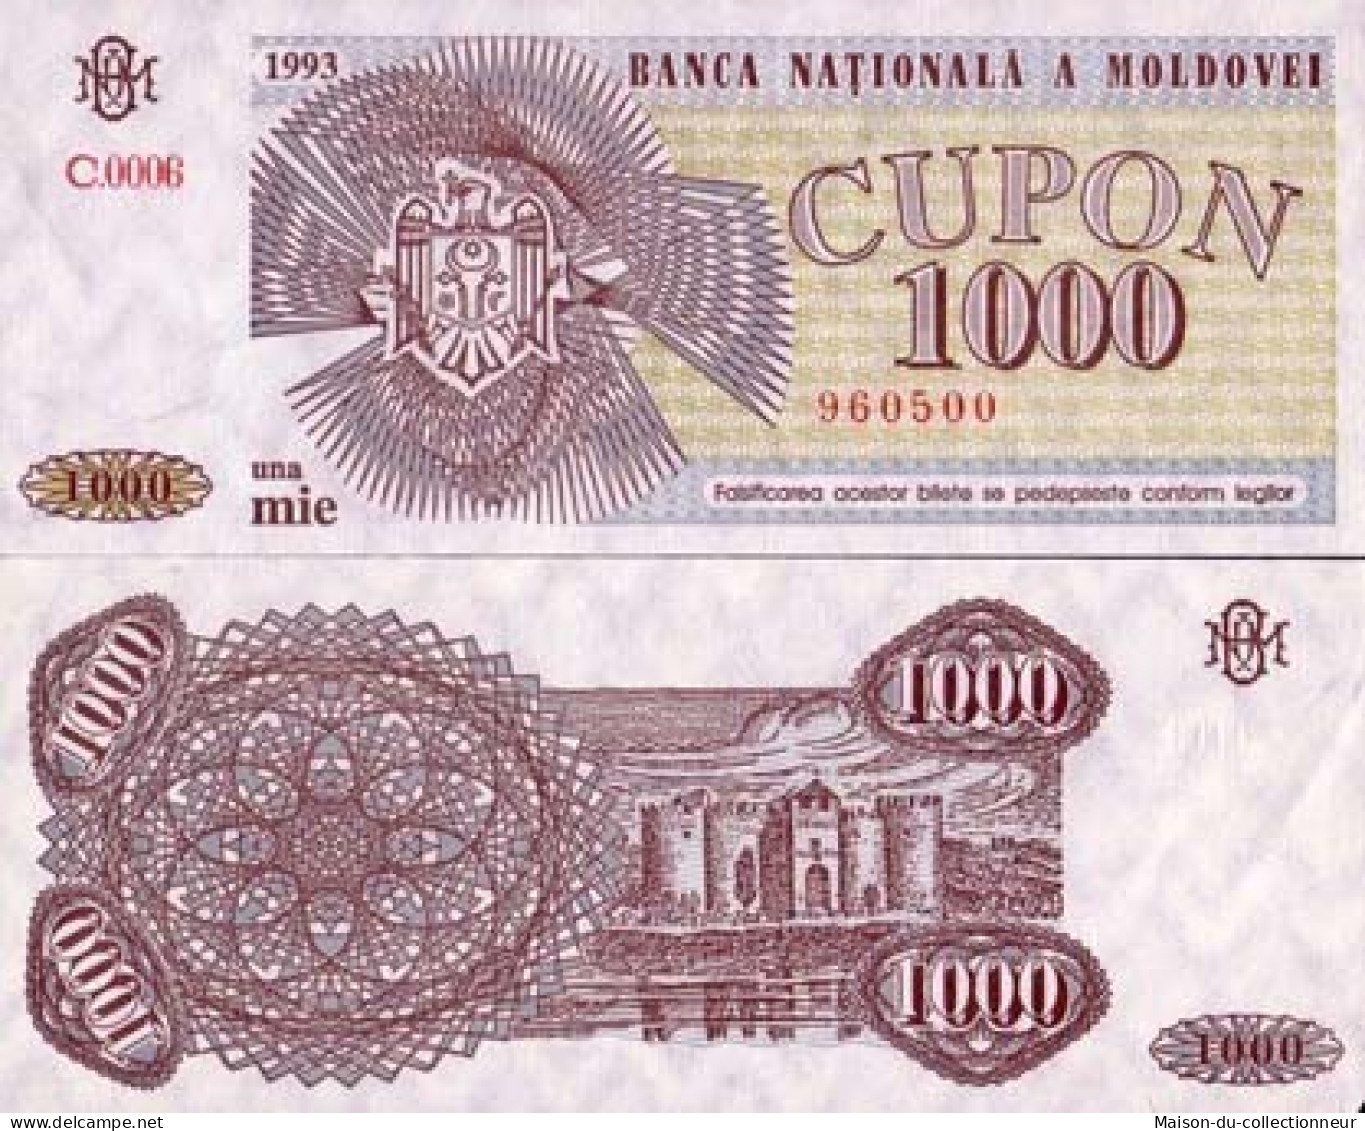 Billets Banque Moldavie Pk N°  3 - 1000 Cupon - Moldova